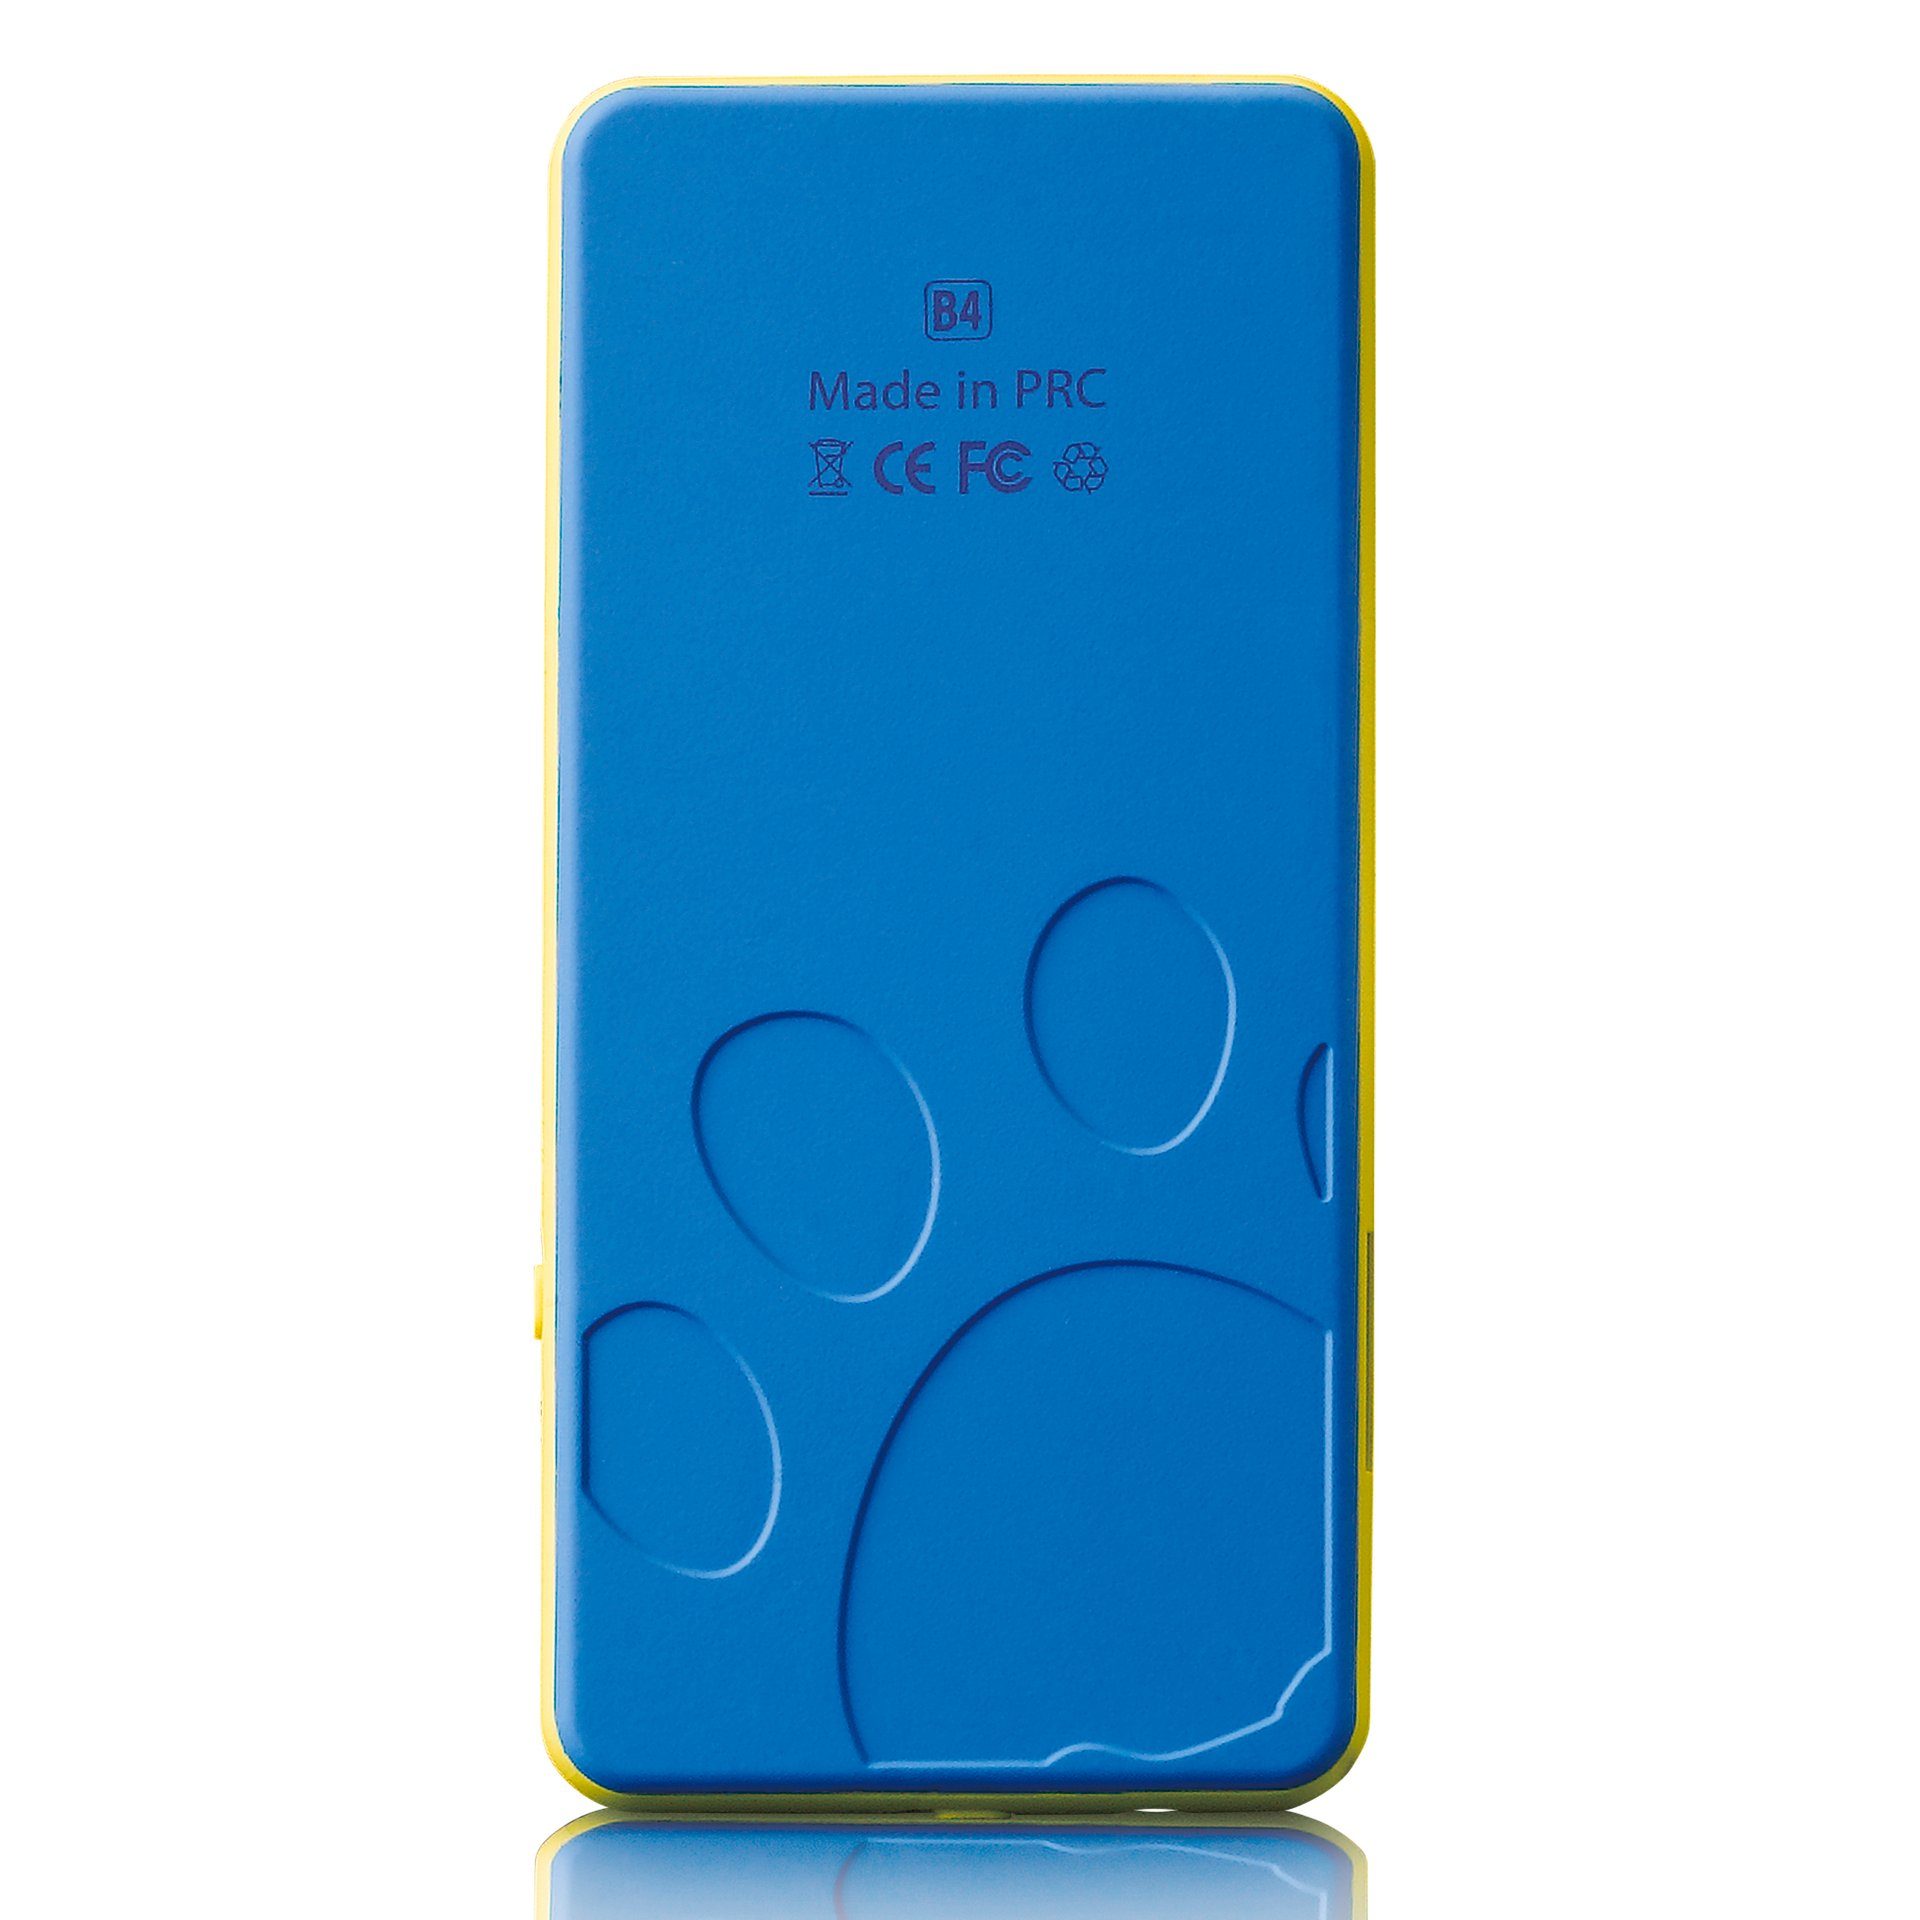 Lenco GB) Xemio-560 (8 Blau MP3-Player